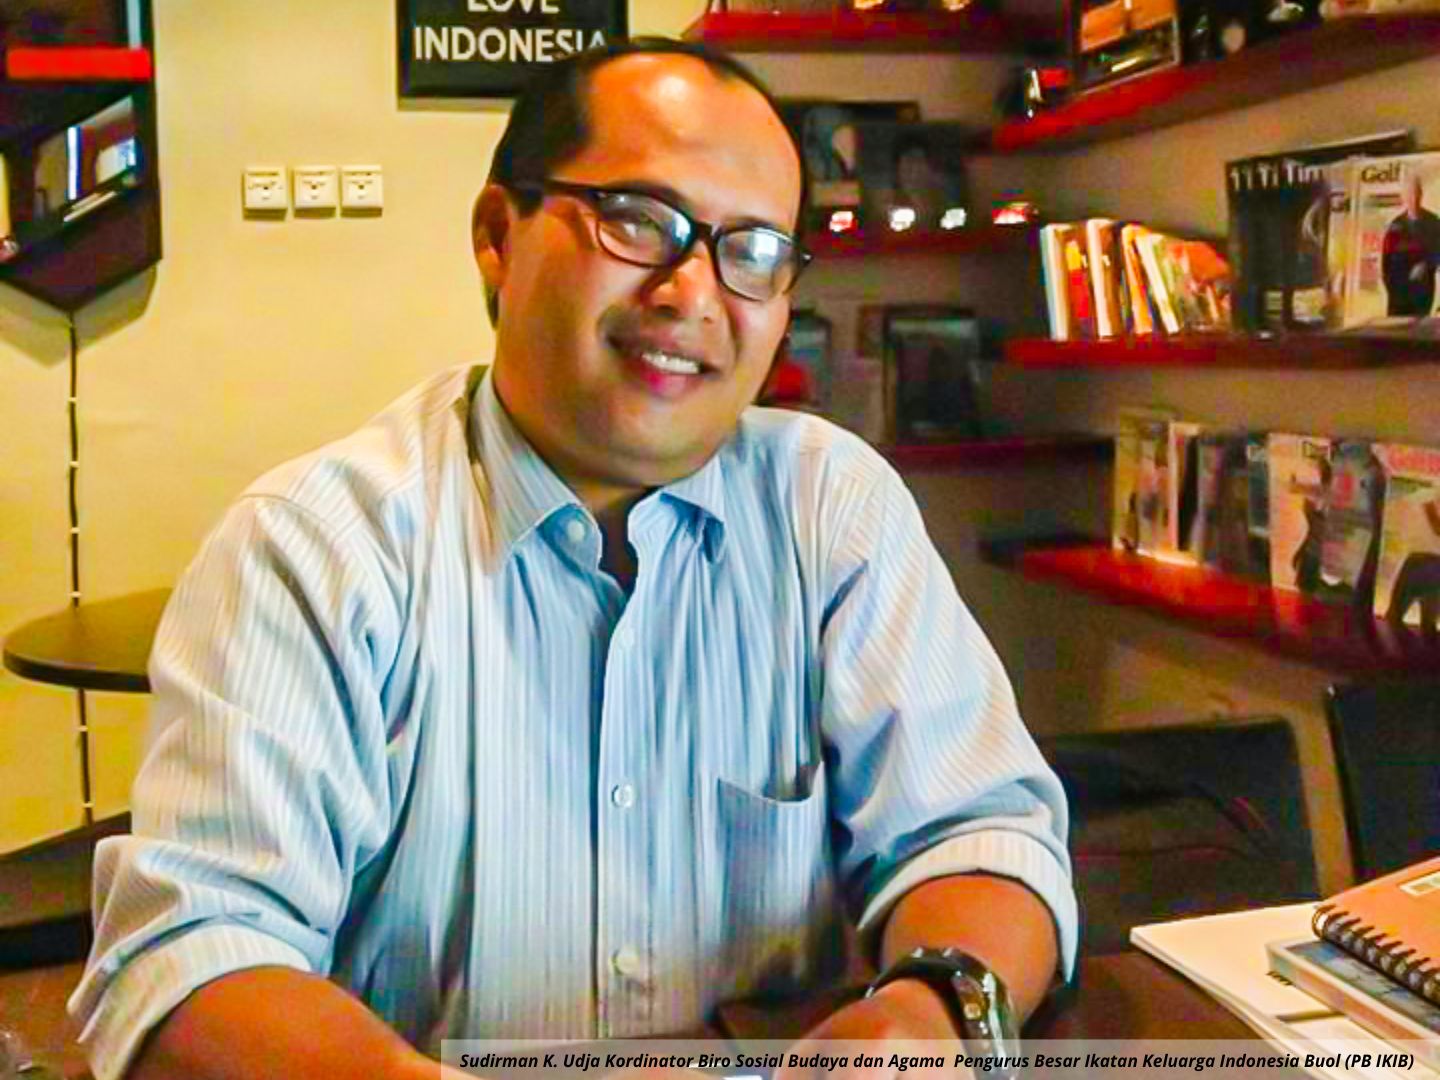 Dr. Sudirman K. Udja, M.Si. Dosen Fakultas Ilmu Sosial dan Ilmu Politik Universitas Tadulako yang saat ini menjabat sebagai Kordinator Biro Sosial Budaya dan Agama PB IKIB (Ikatan Keluarga Indonesia Buol)